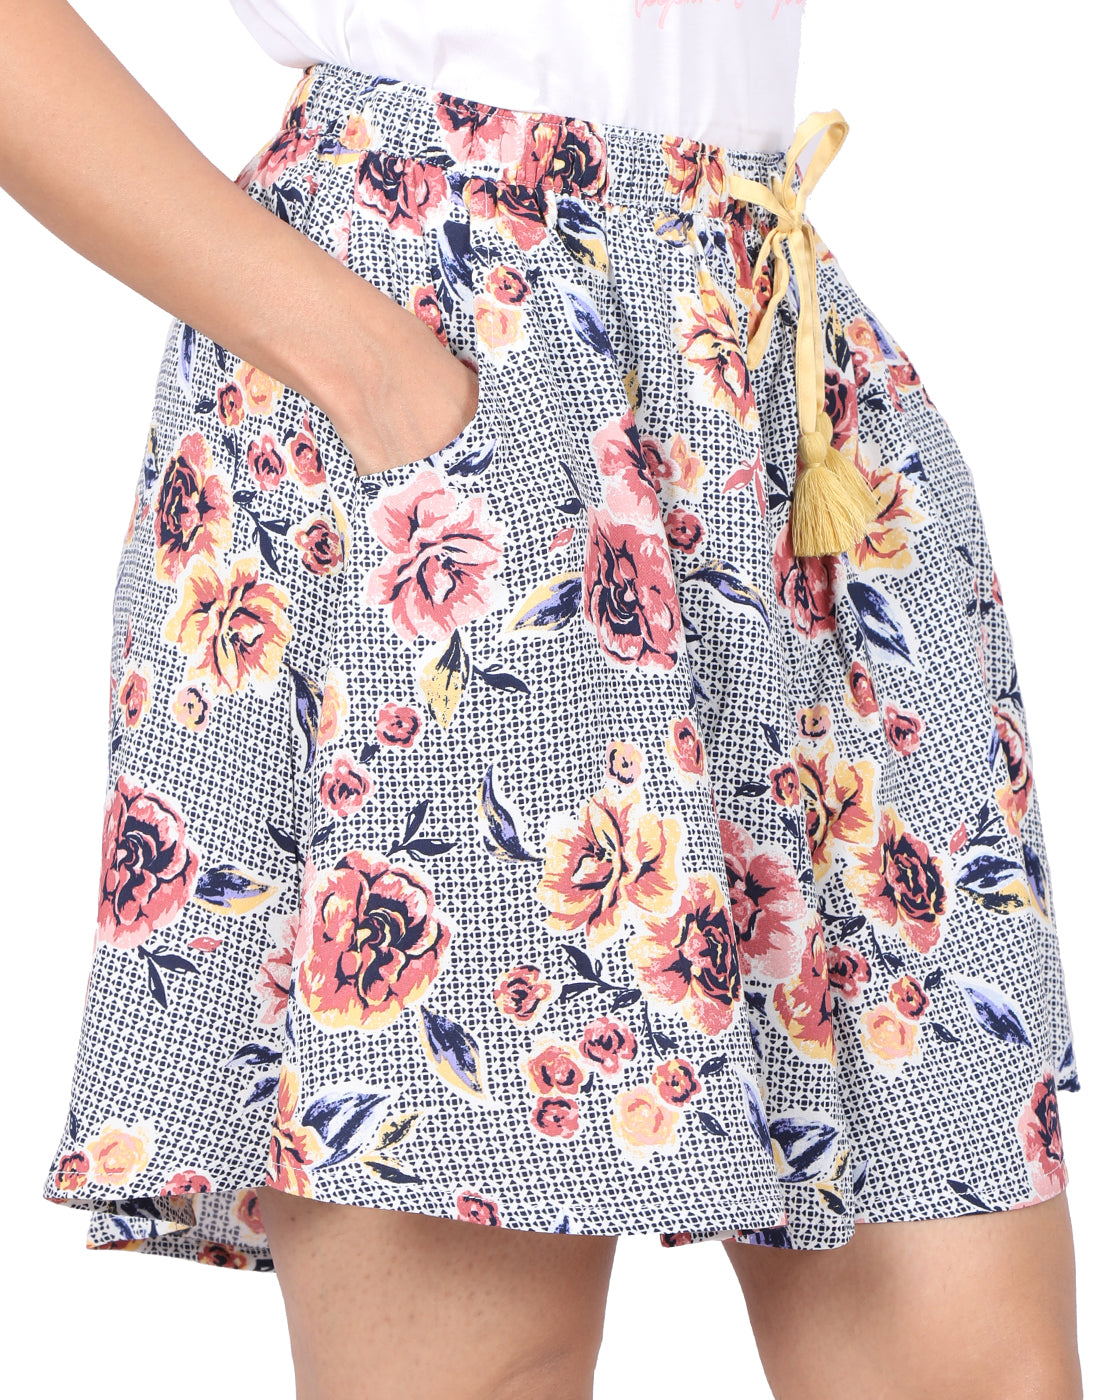 Culotte Shorts for Women-Picnic Floral